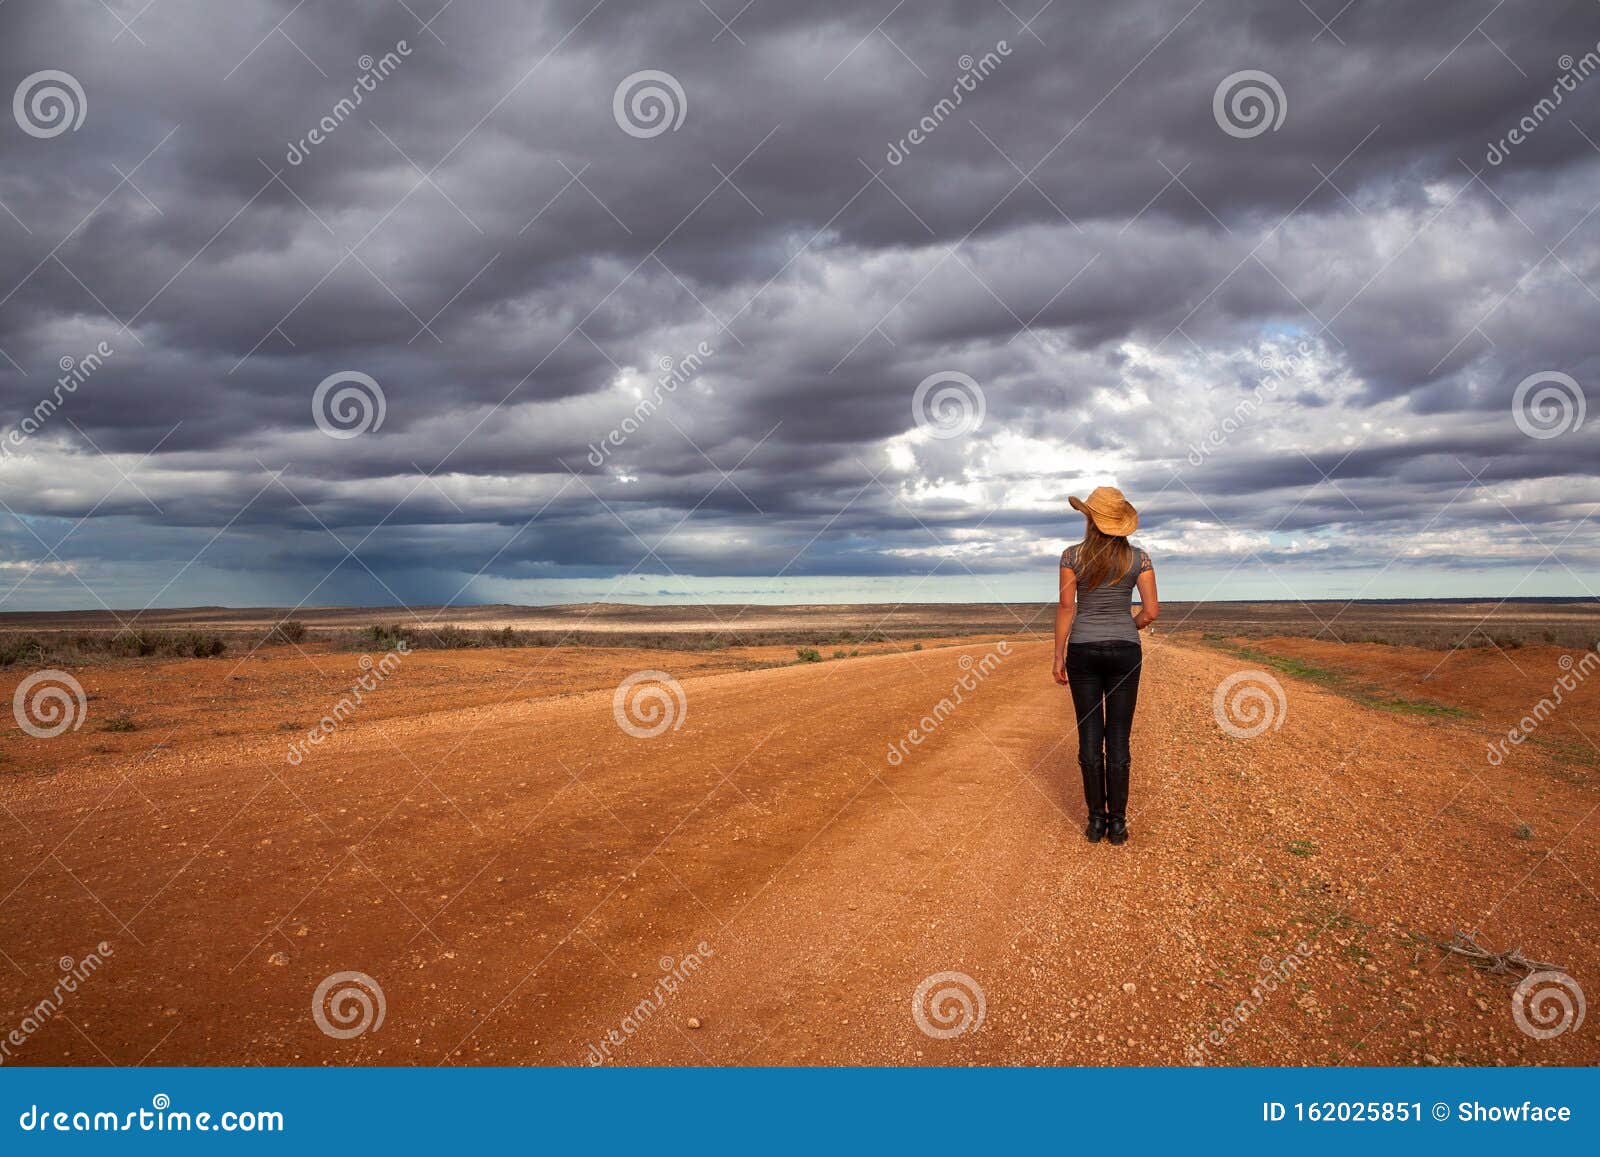 farm girl watching storm over the arid desert